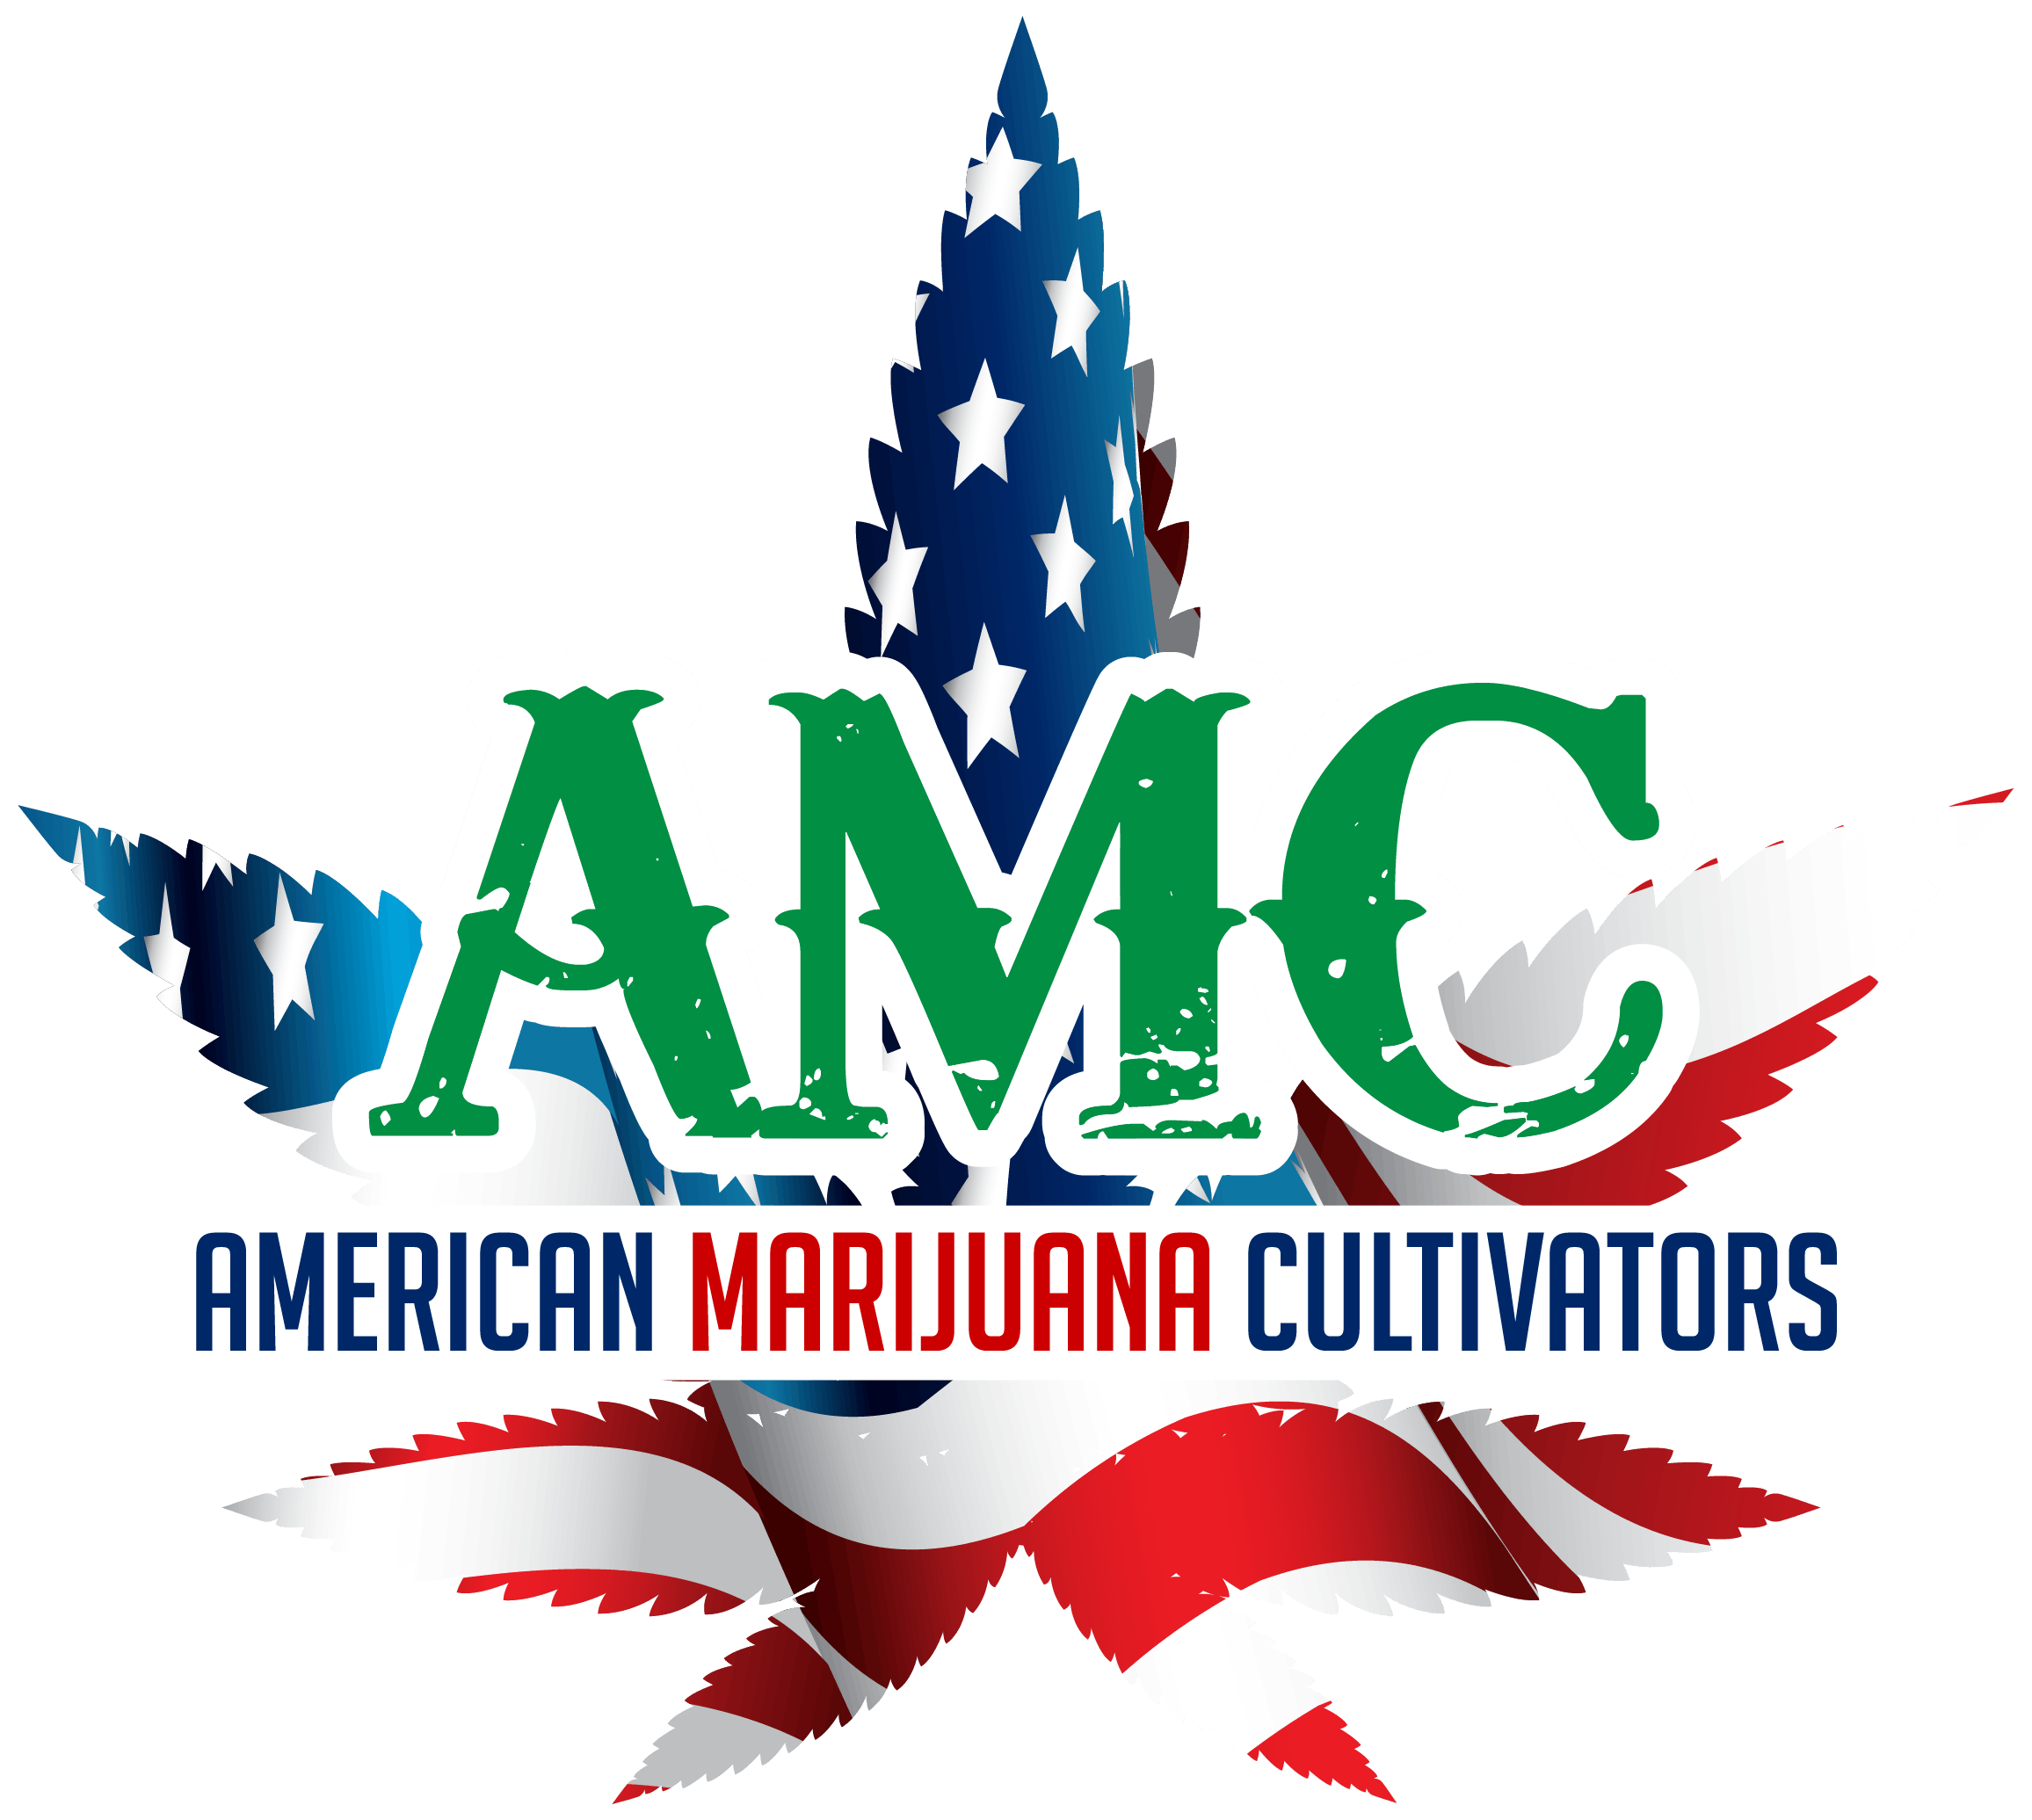 American Marijuana Cultivators